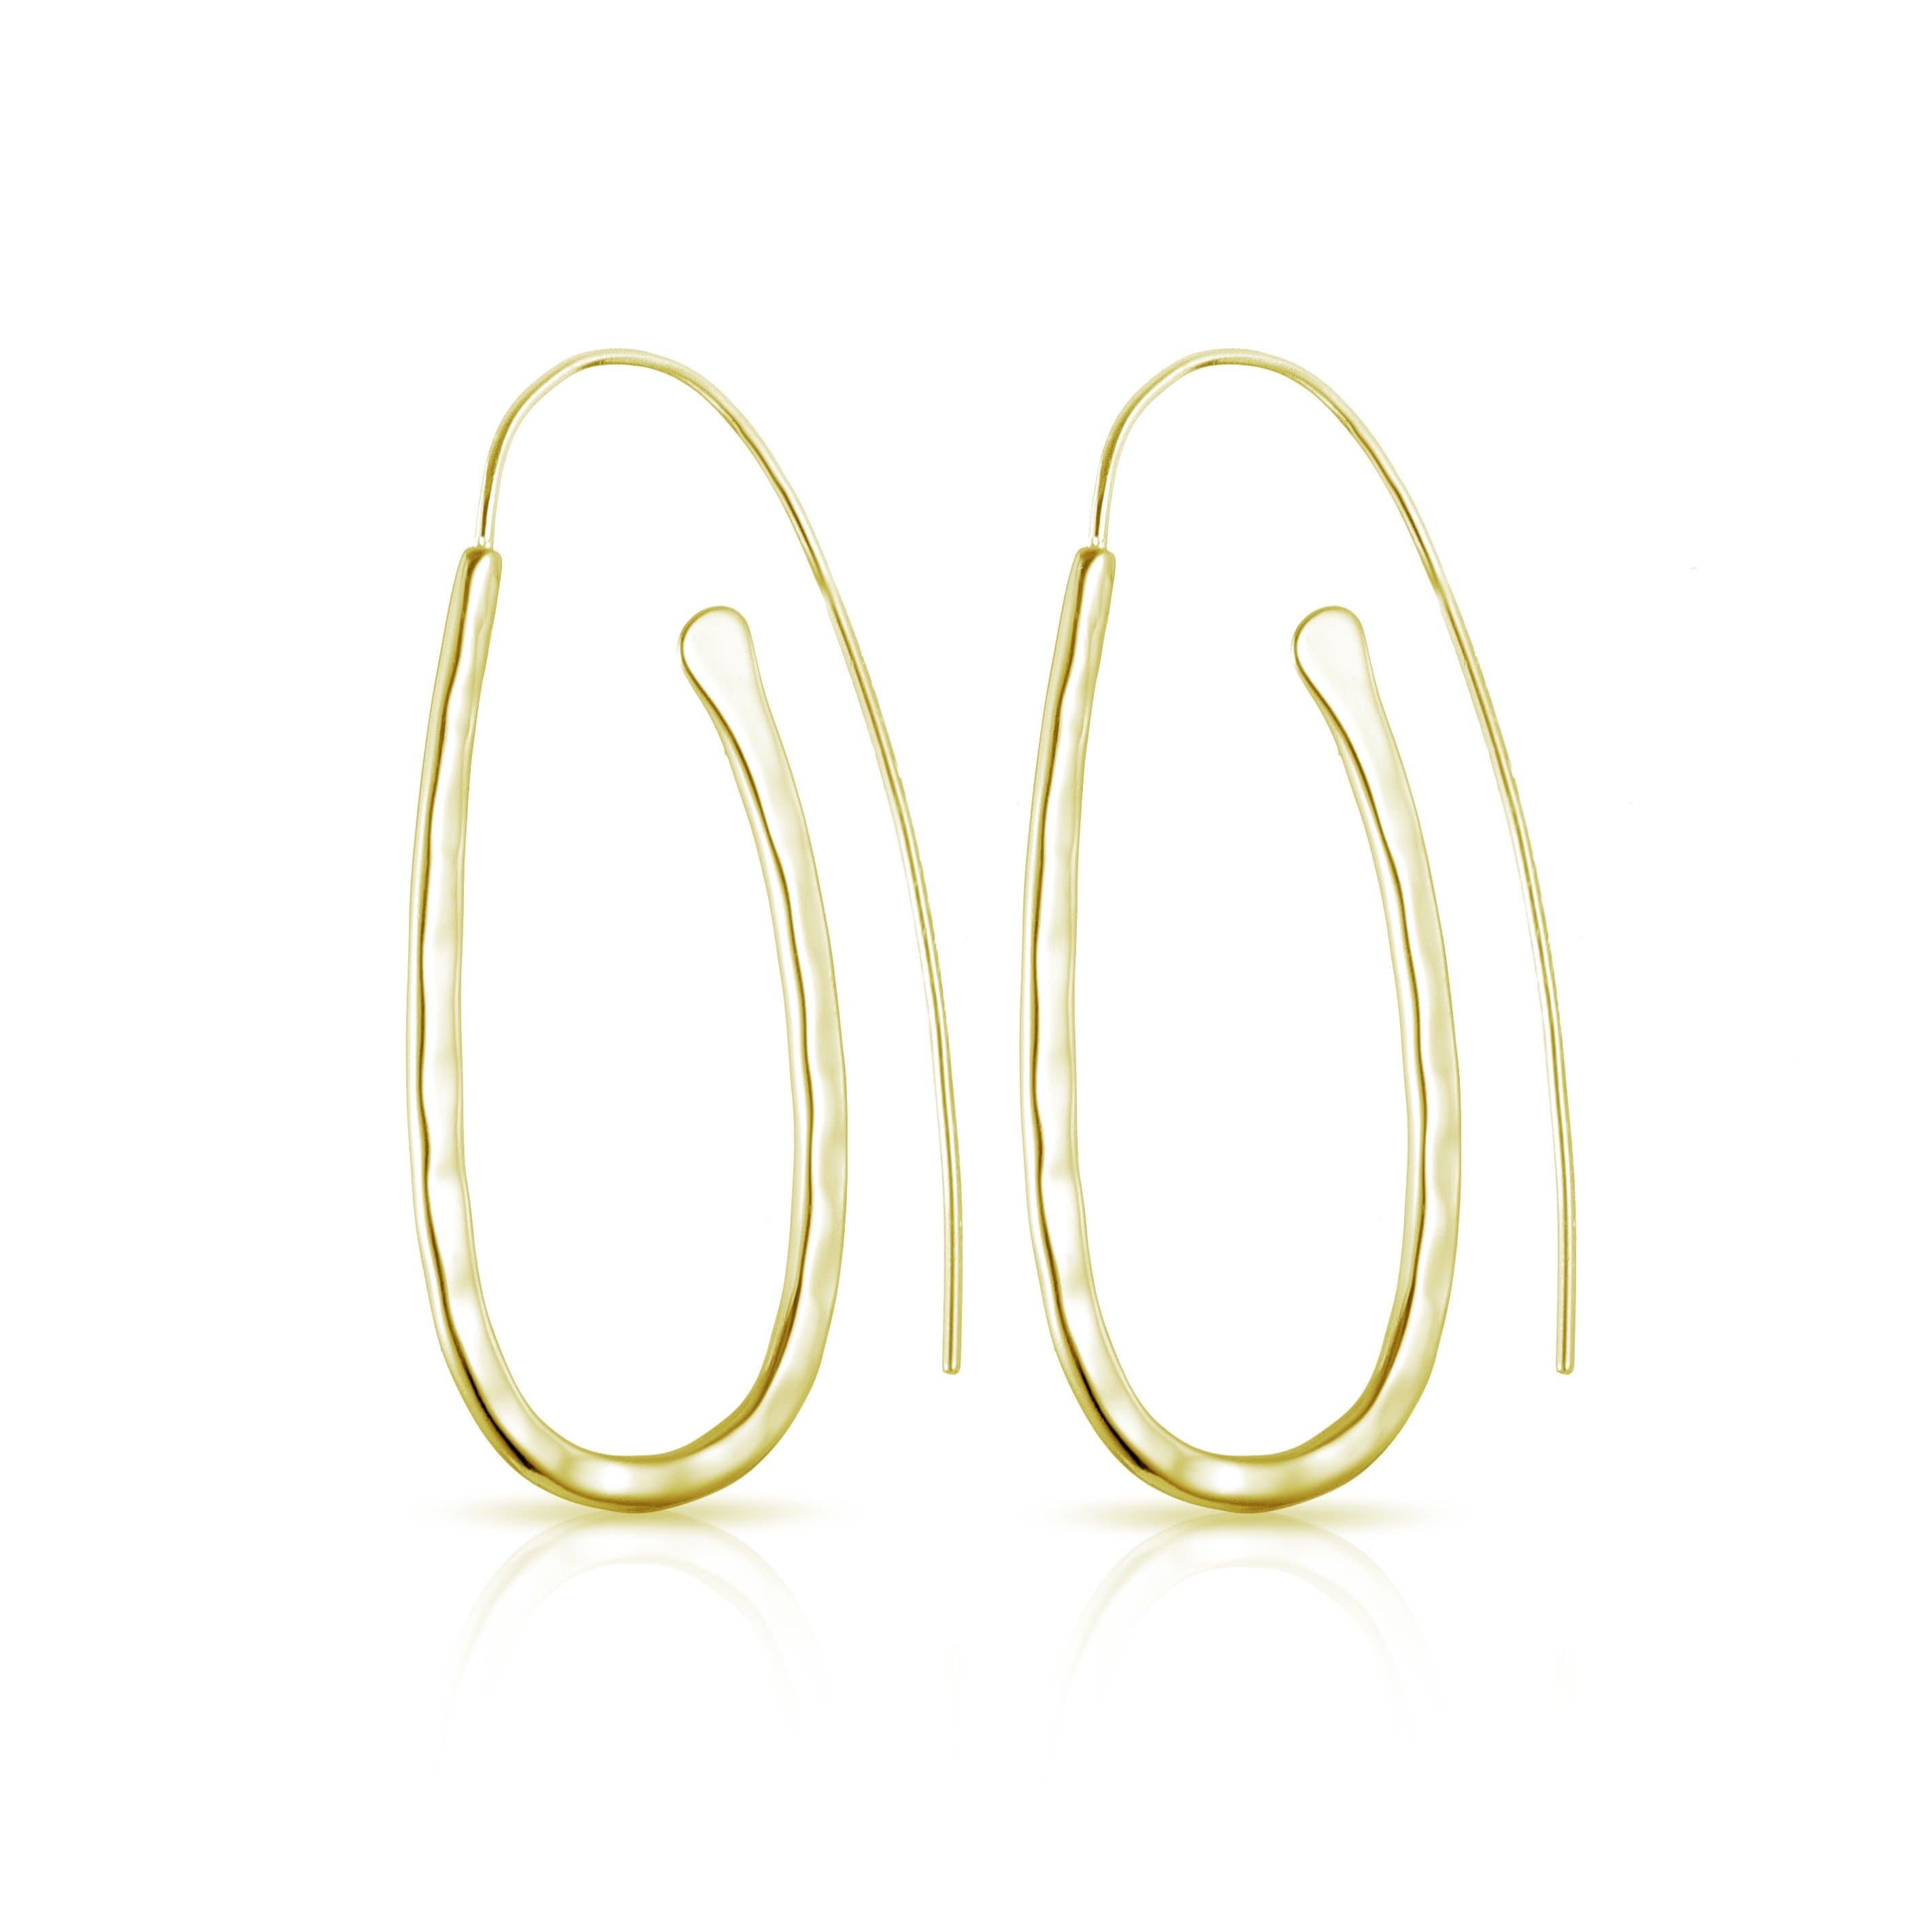 Gold Plated Sterling Silver Hammered Hoop Earrings by Philip Jones Jewellery